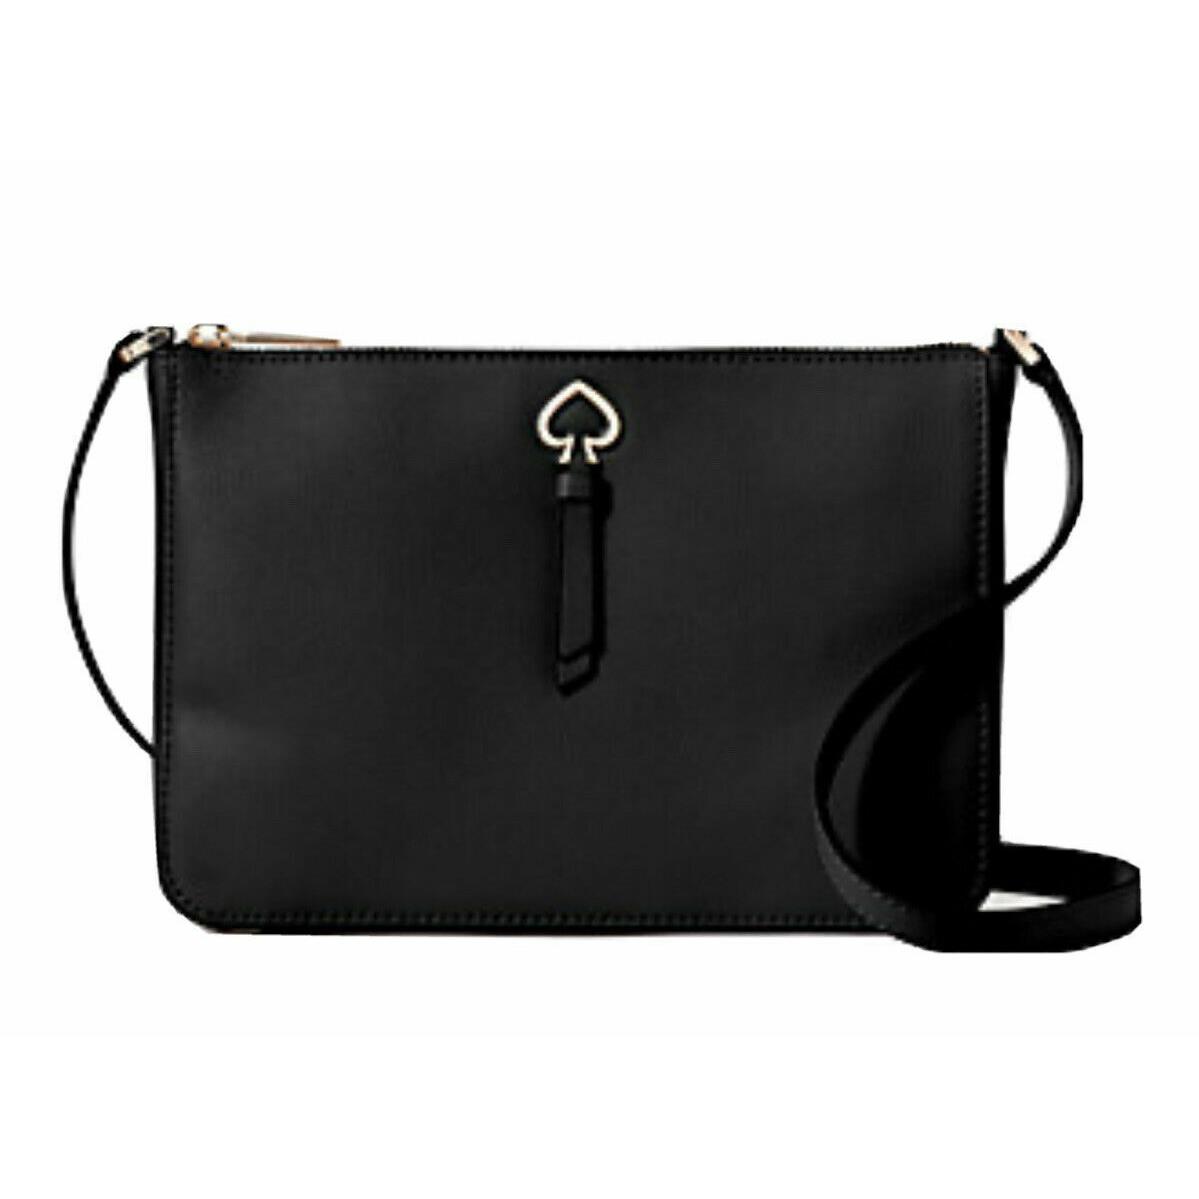 Kate Spade Crossbody Leather Black Handbag Shoulderbag Purse